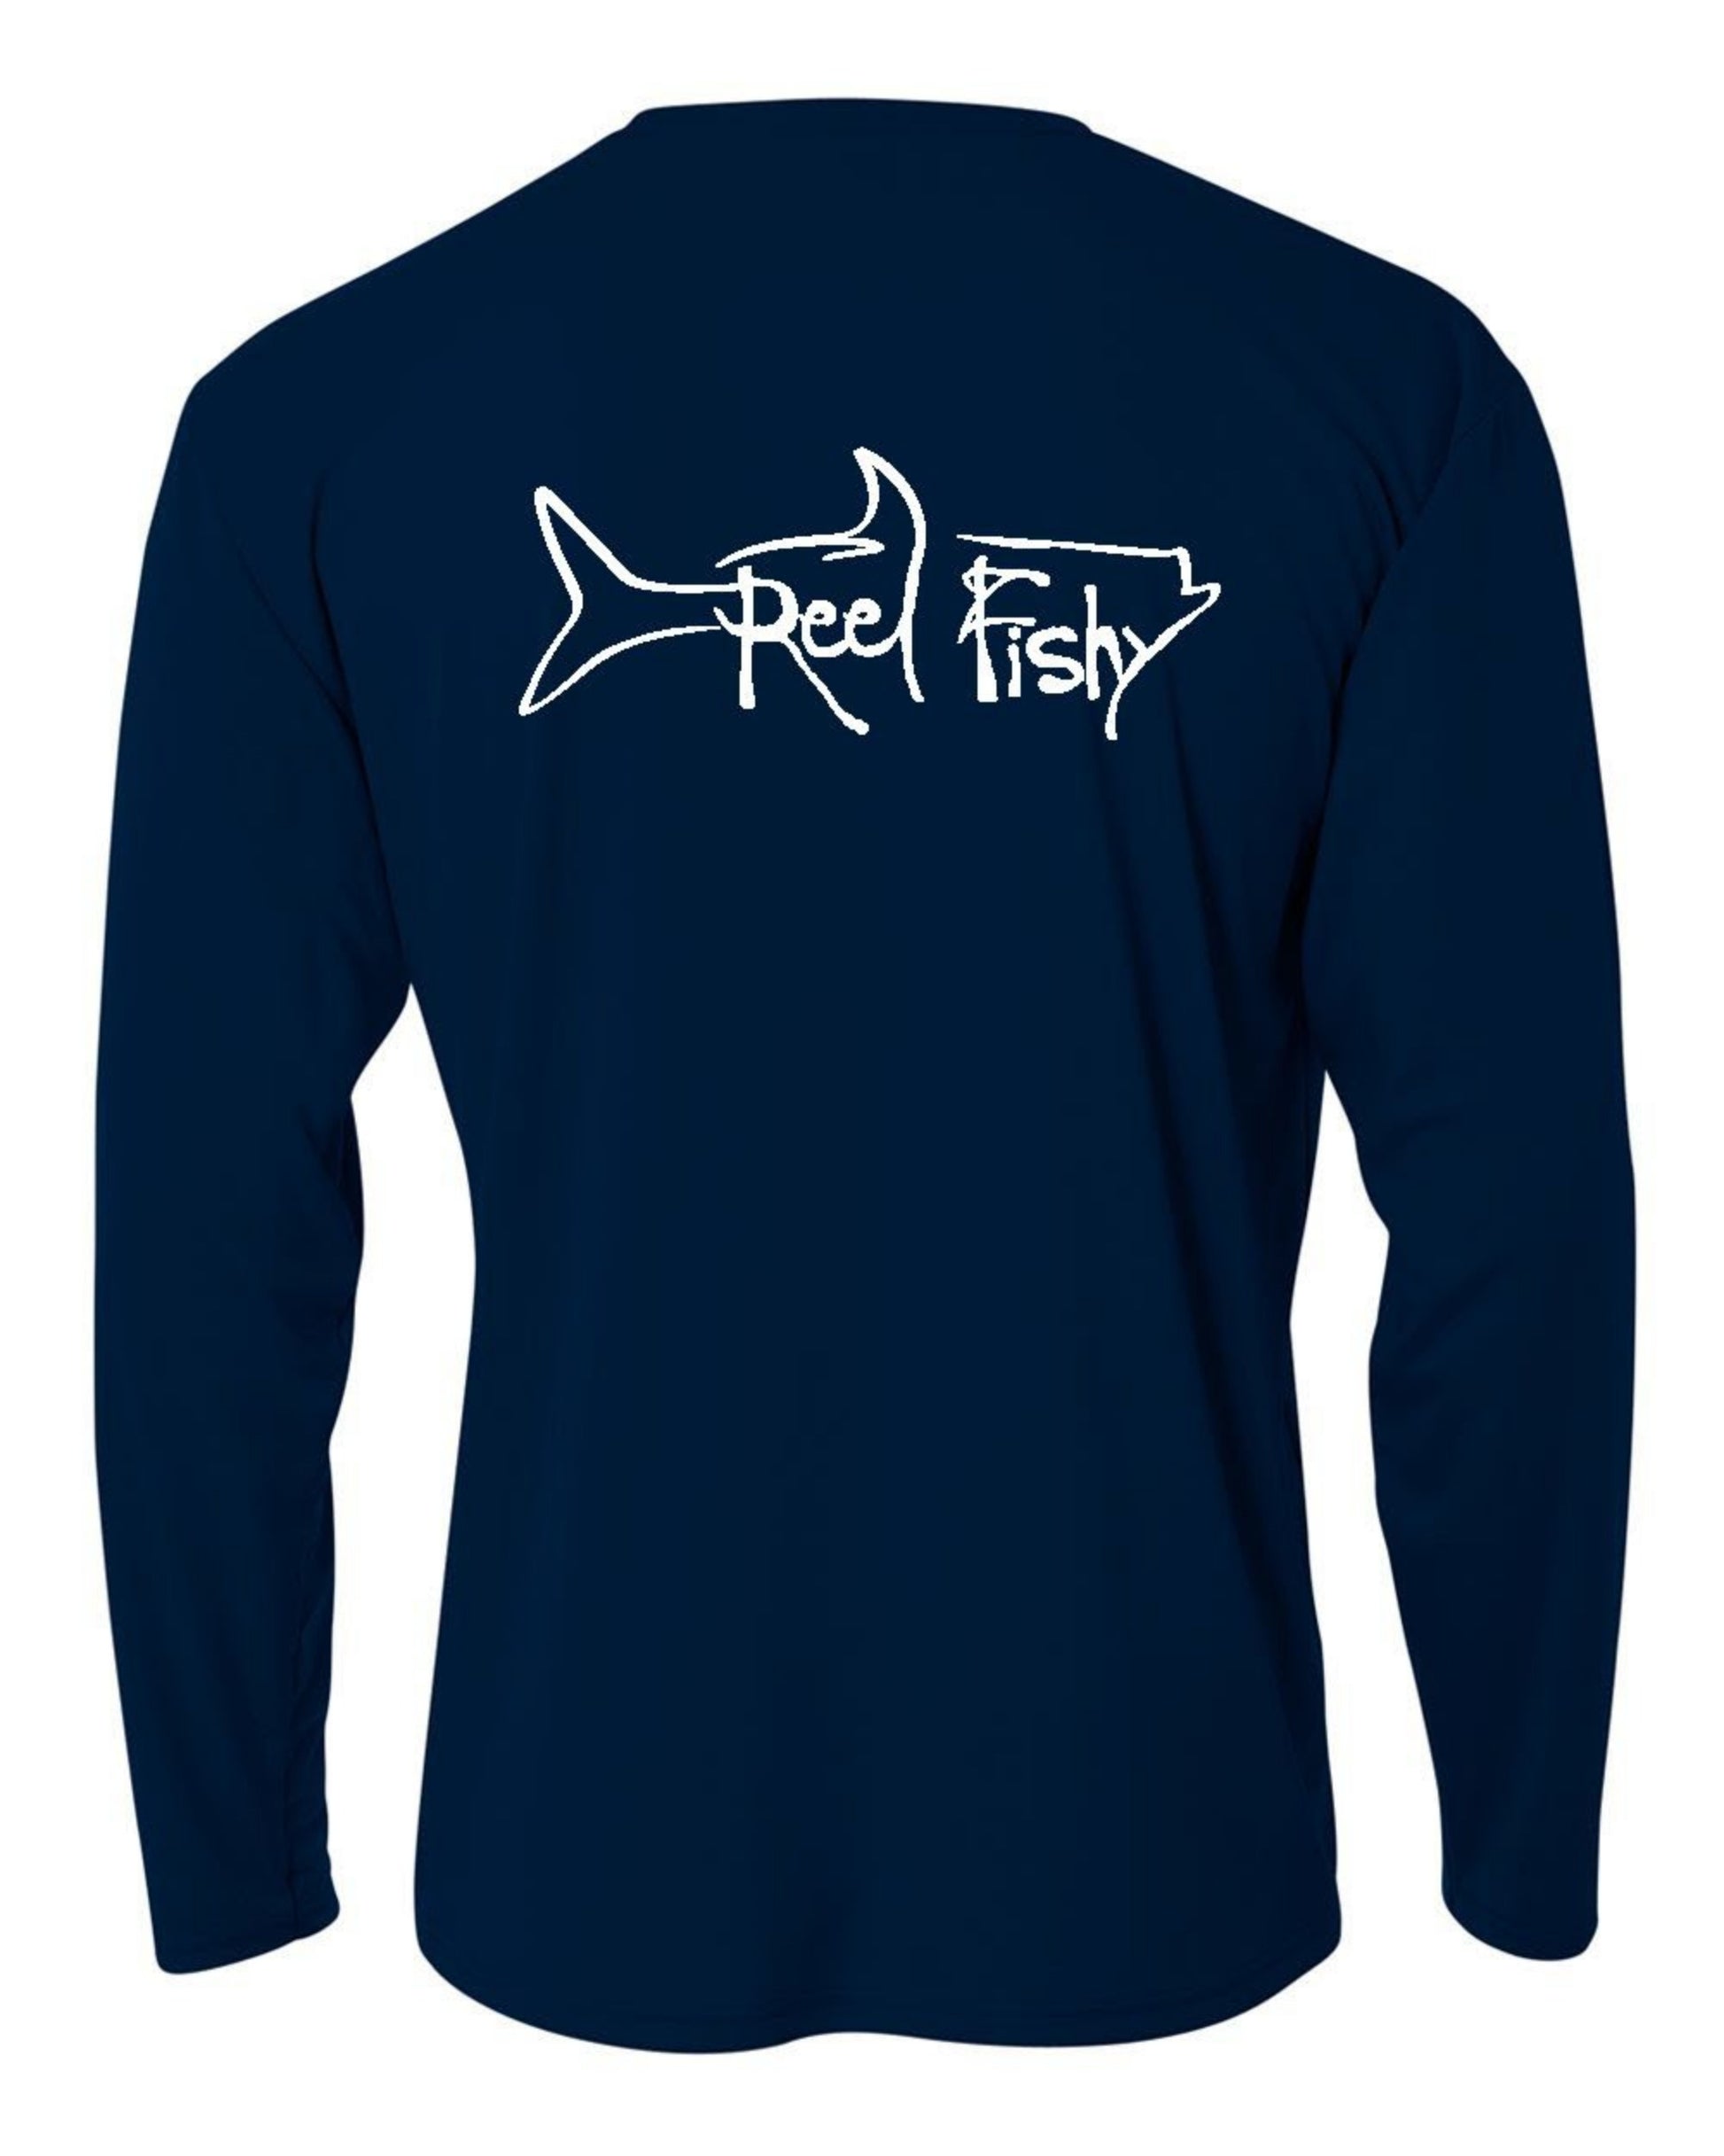 Youth Performance Dry-Fit Tarpon Fishing Shirts 50+Upf Sun Protection - Reel Fishy Apparel L / Navy L/S